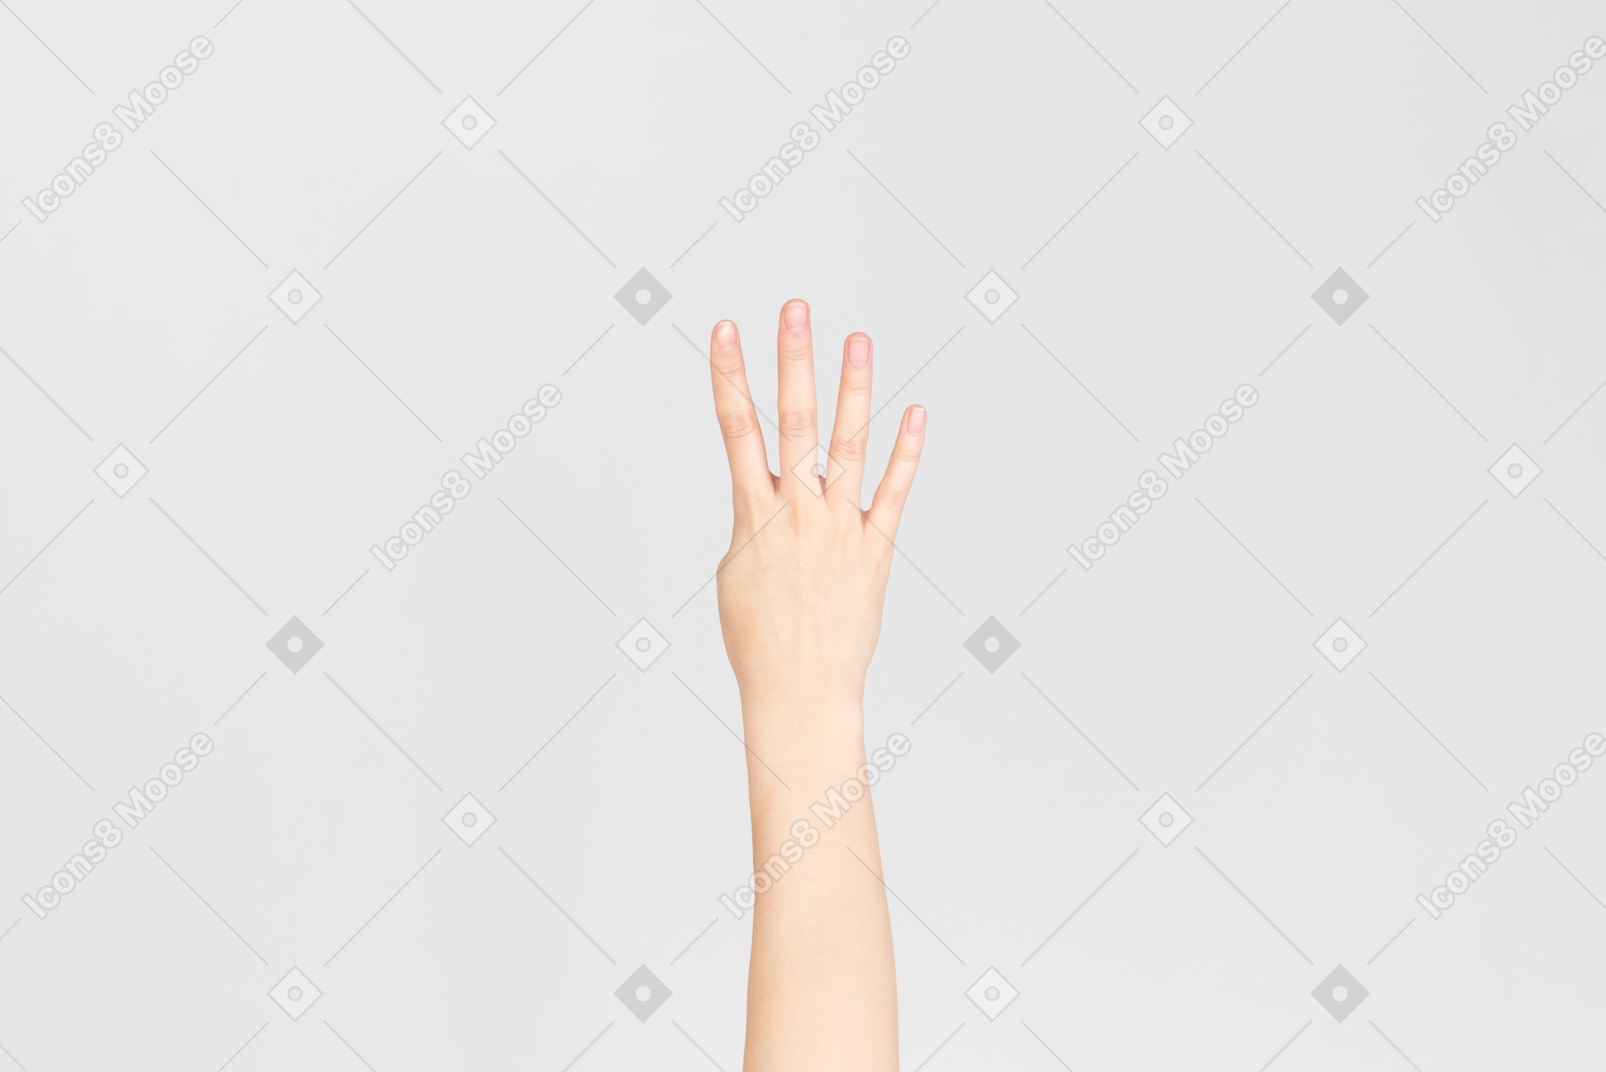 Женская рука показывает четыре пальца